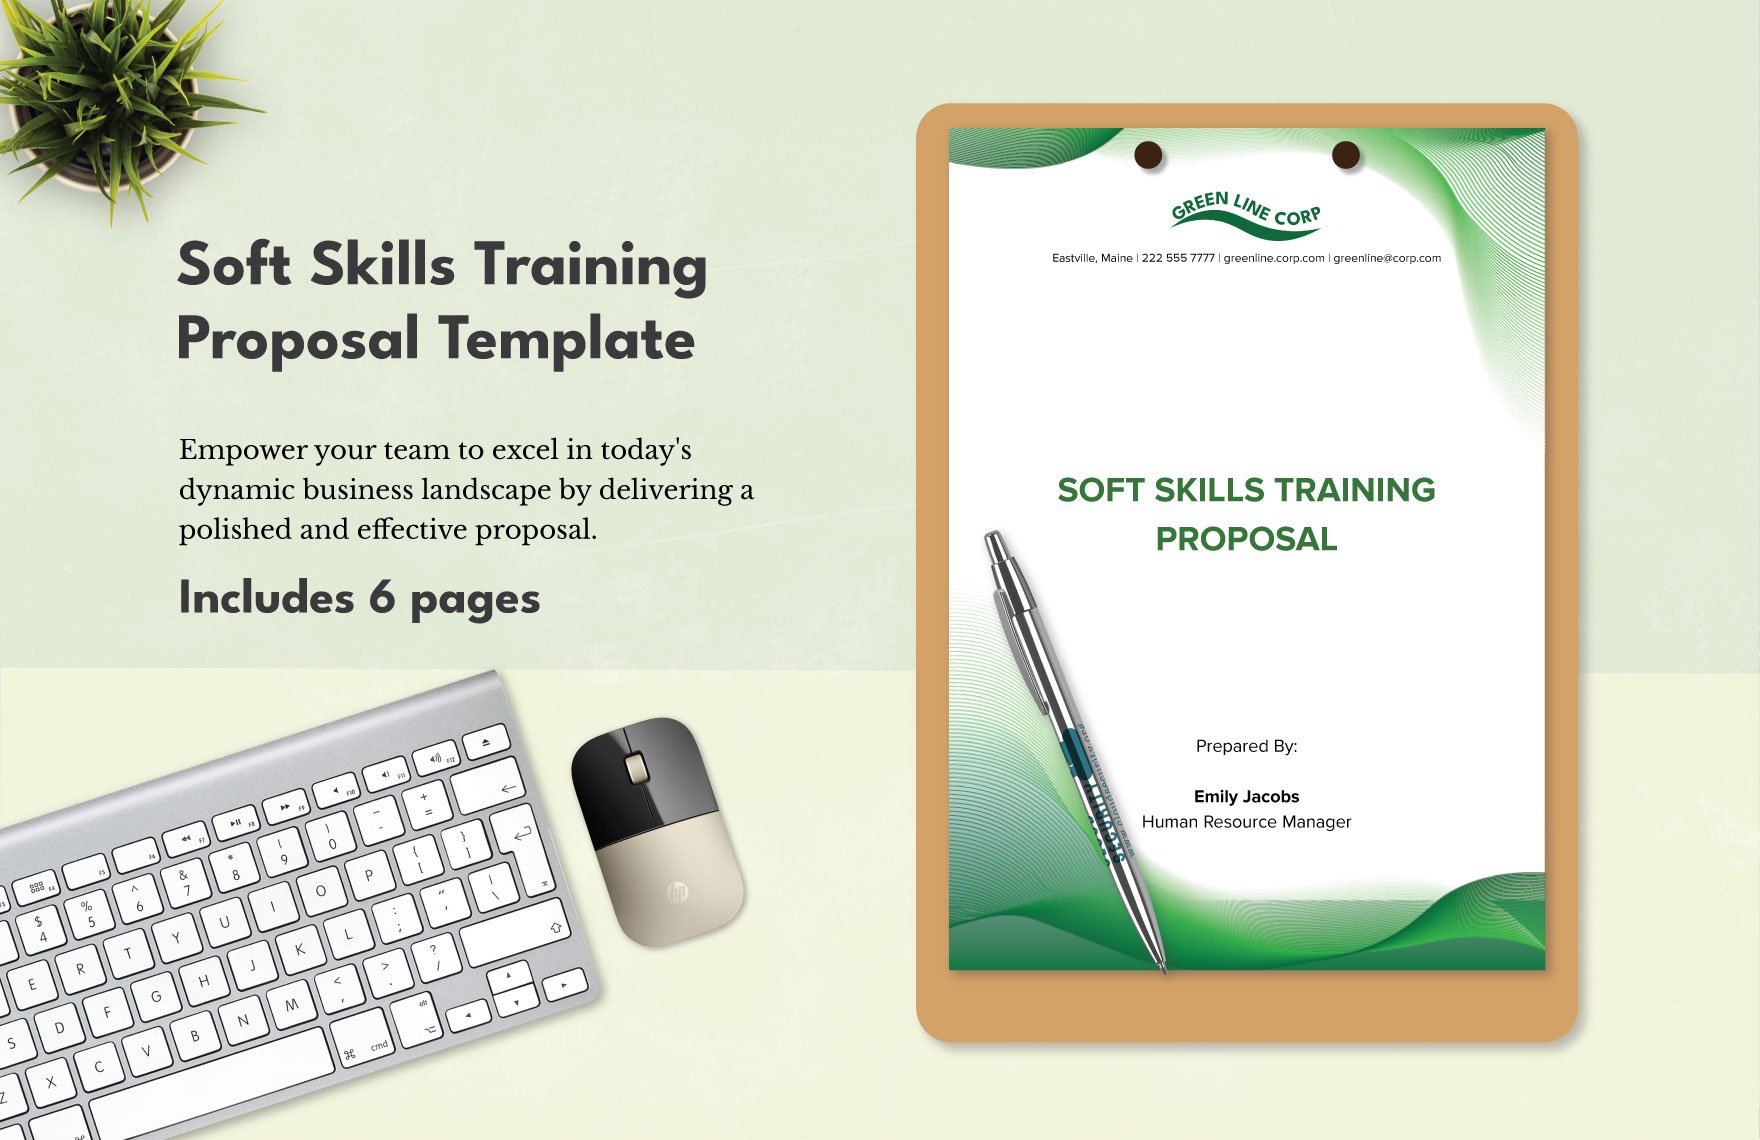 Soft Skills Training Proposal Template